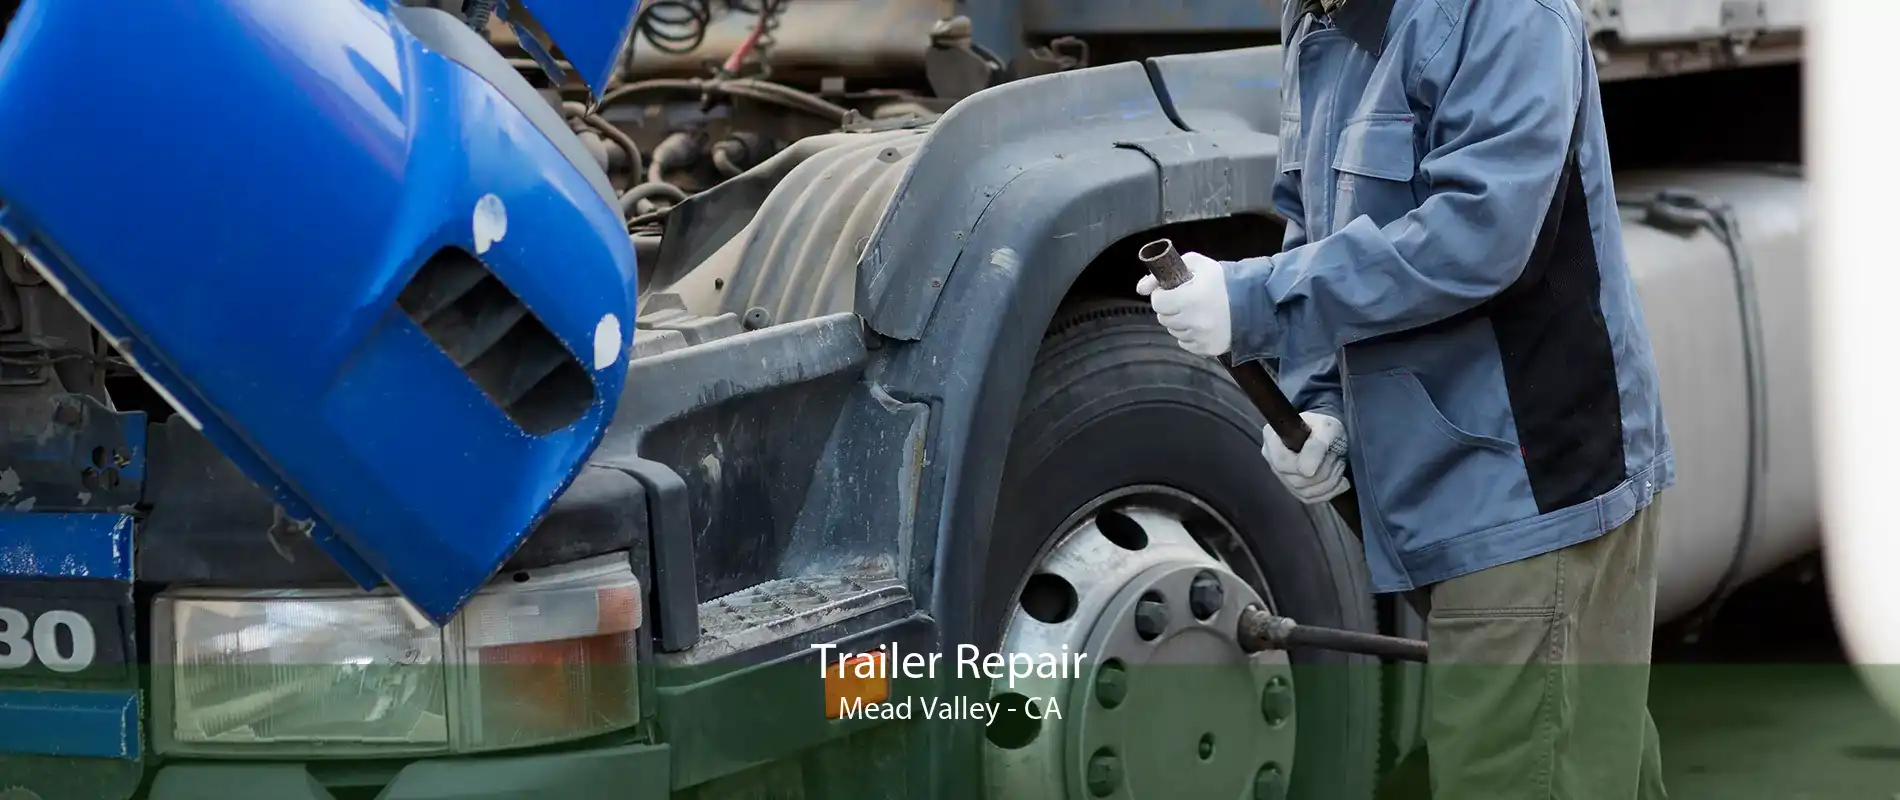 Trailer Repair Mead Valley - CA